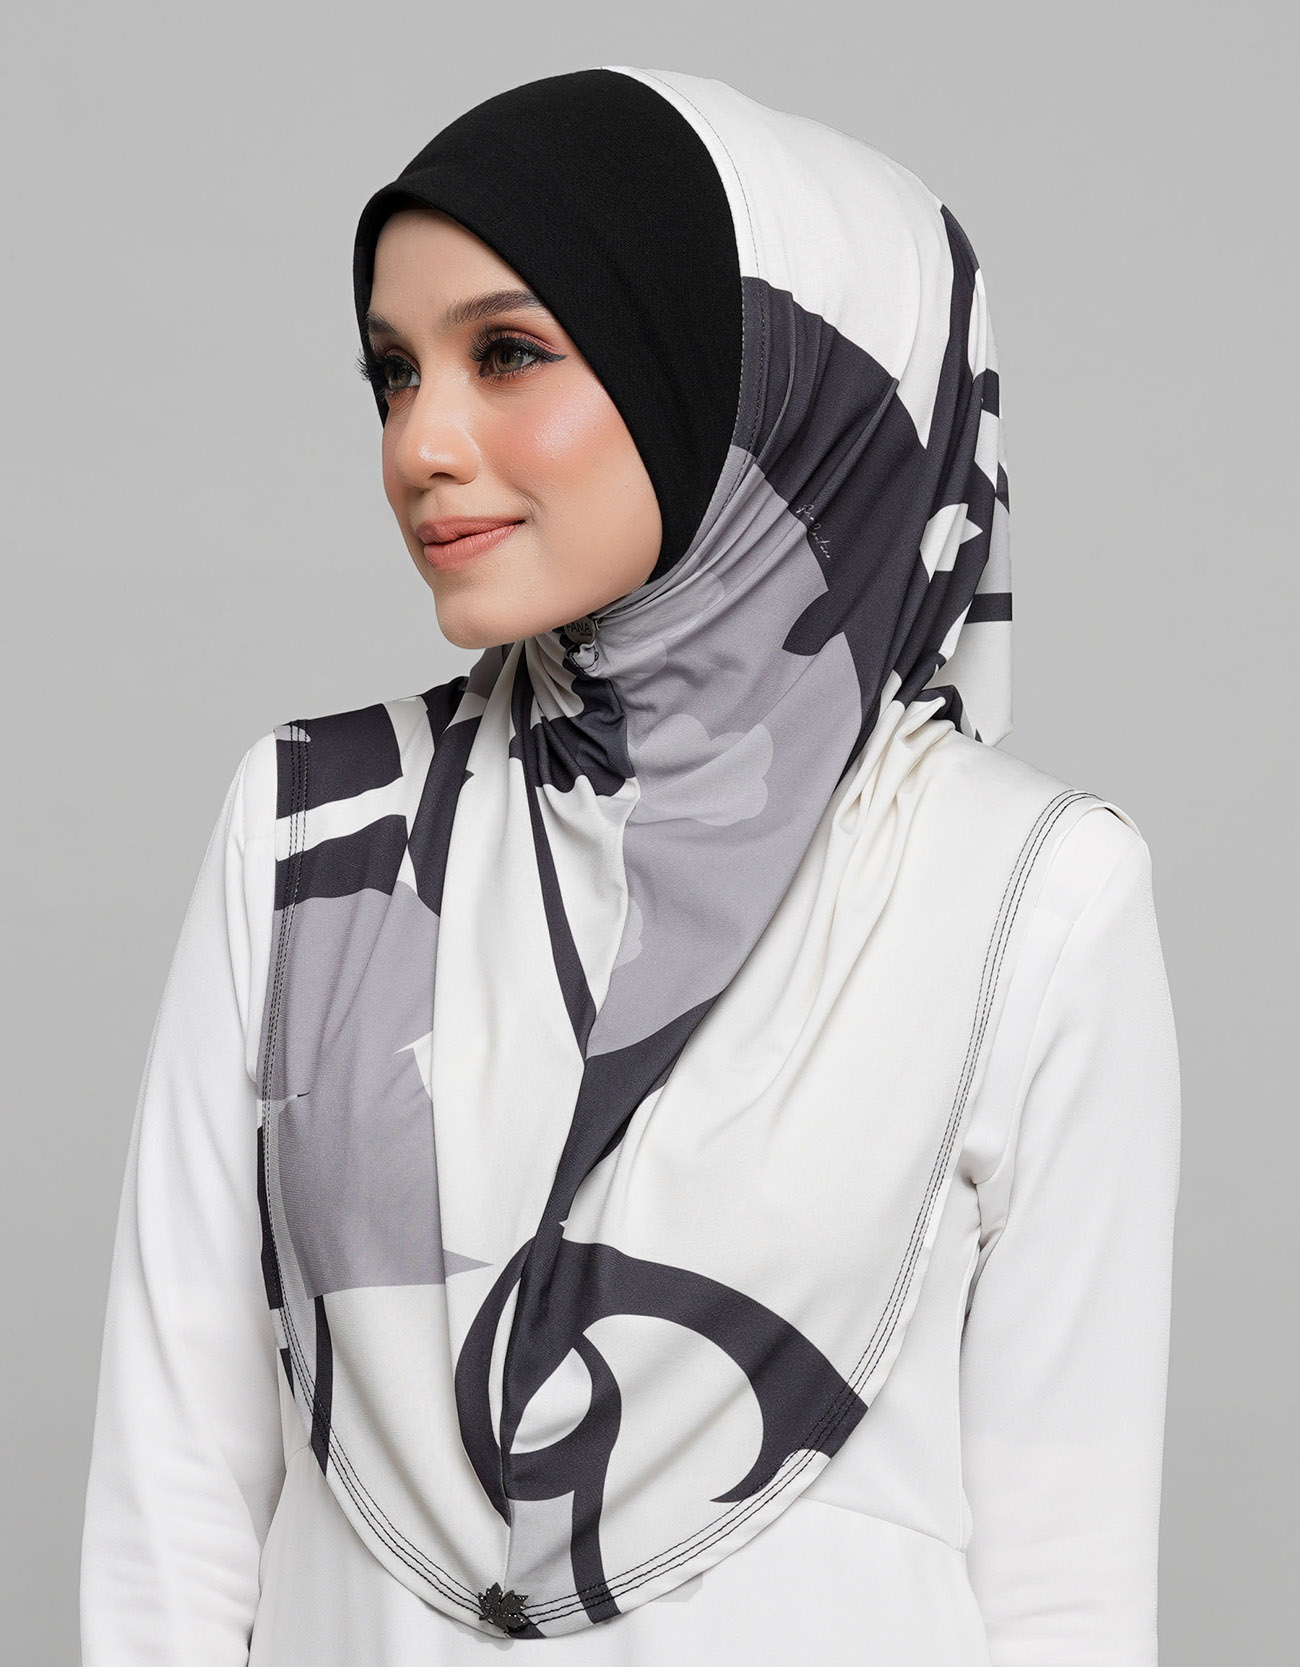 Express Hijab Damia Signature 14 - Black Edition&w=300&zc=1